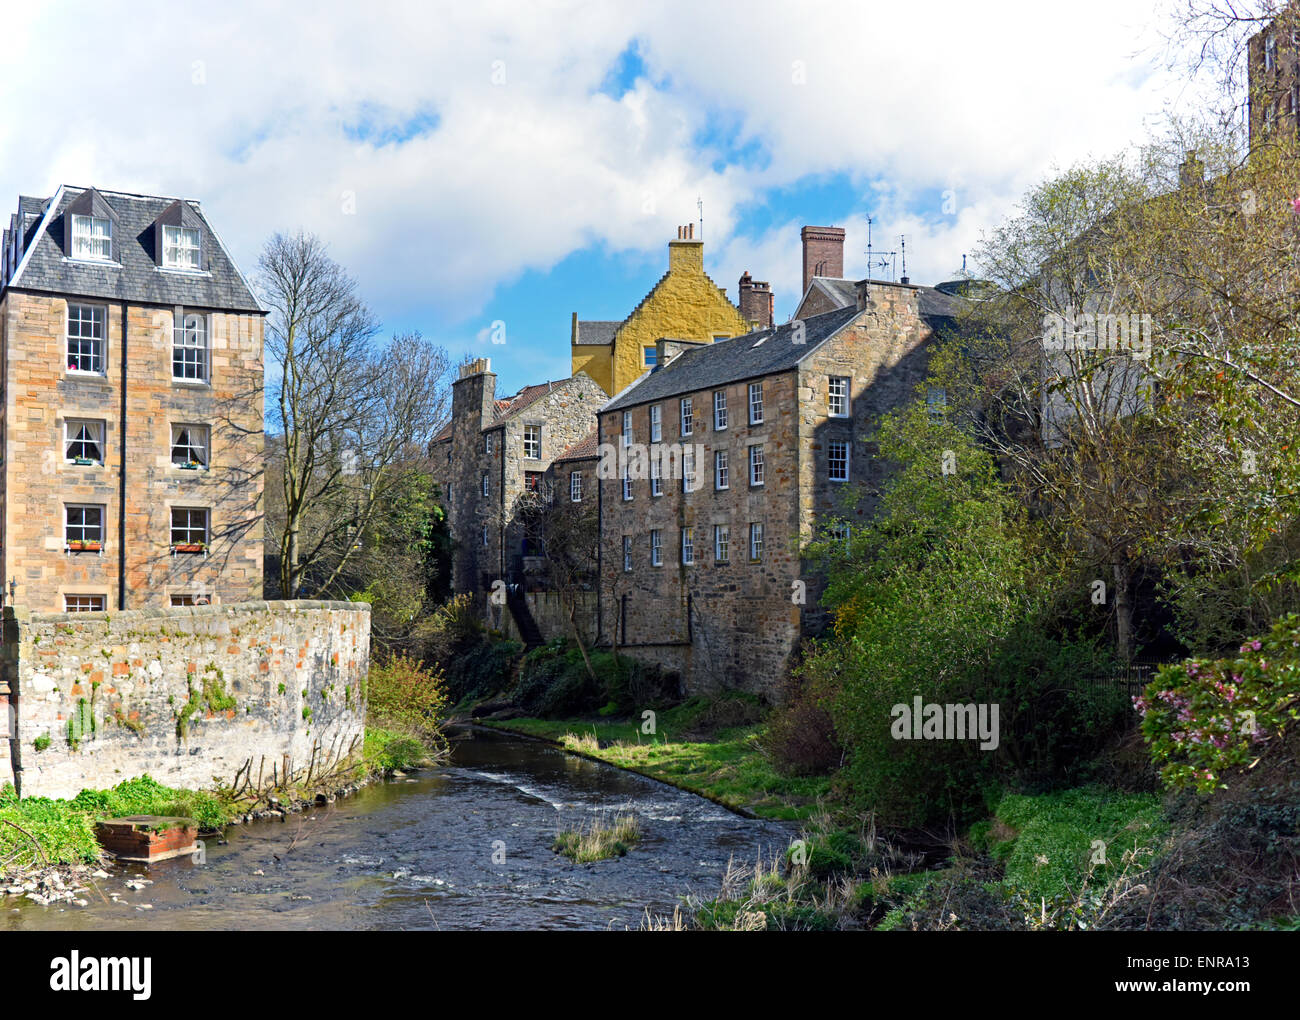 The Water of Leith. Dean Village, Edinburgh, Scotland, United Kingdom, Europe. Stock Photo